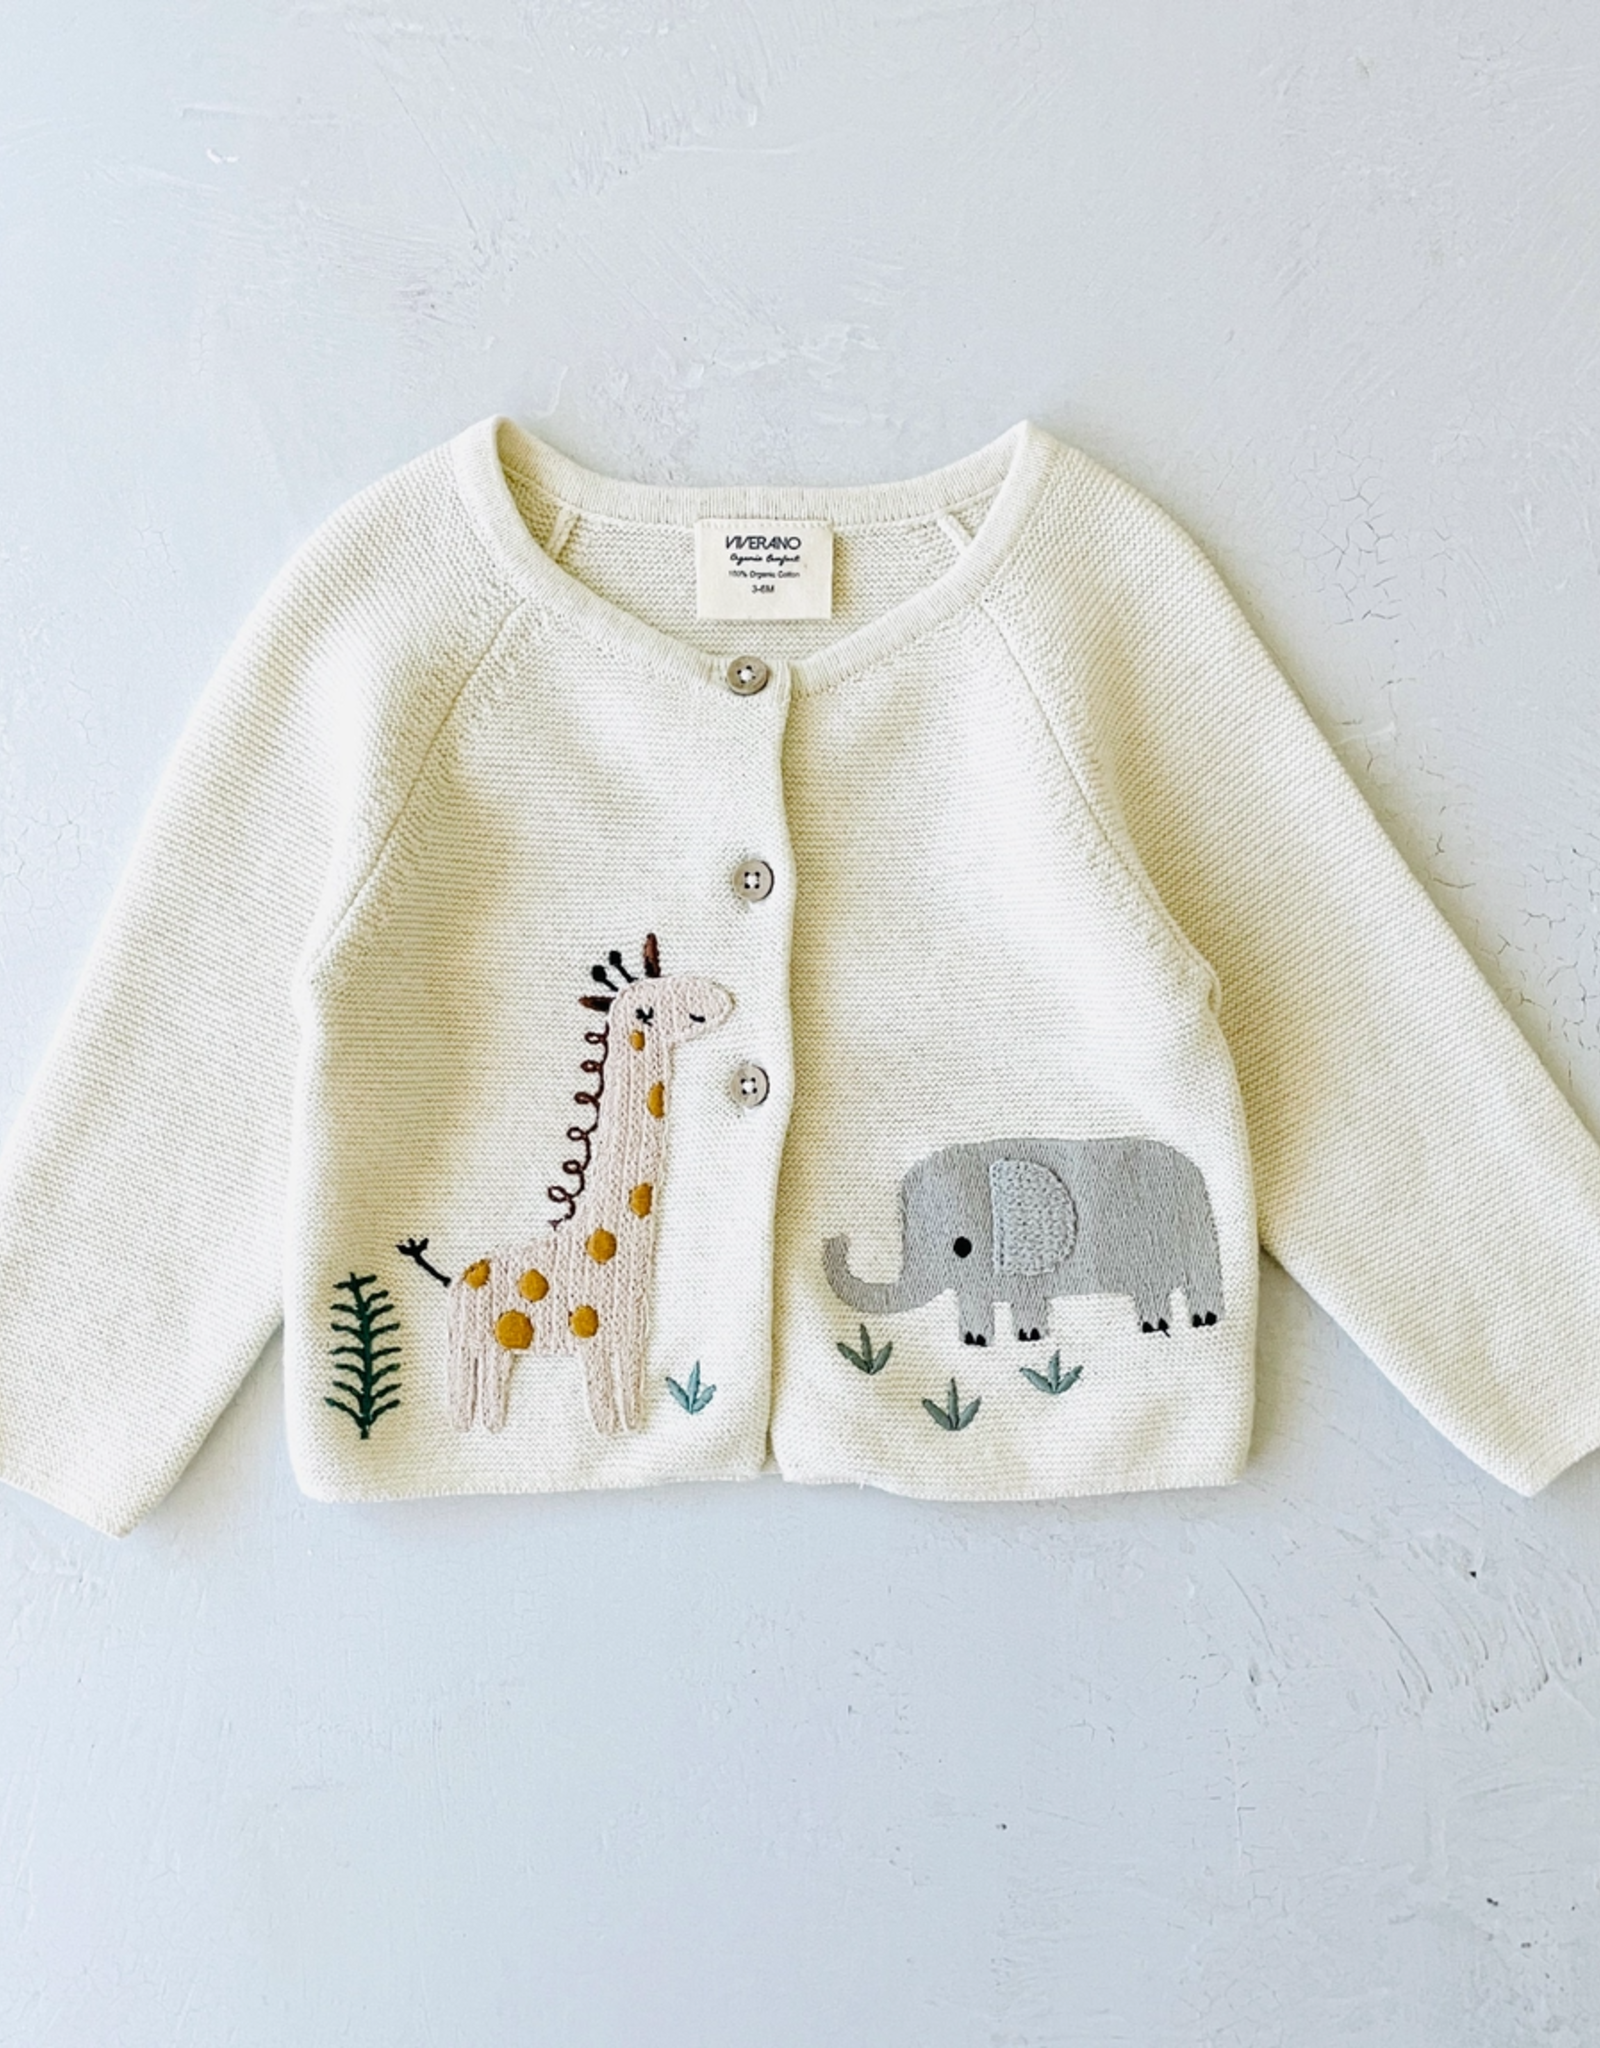 Viverano Animal Safari Embroidered Baby Cardigan Sweater